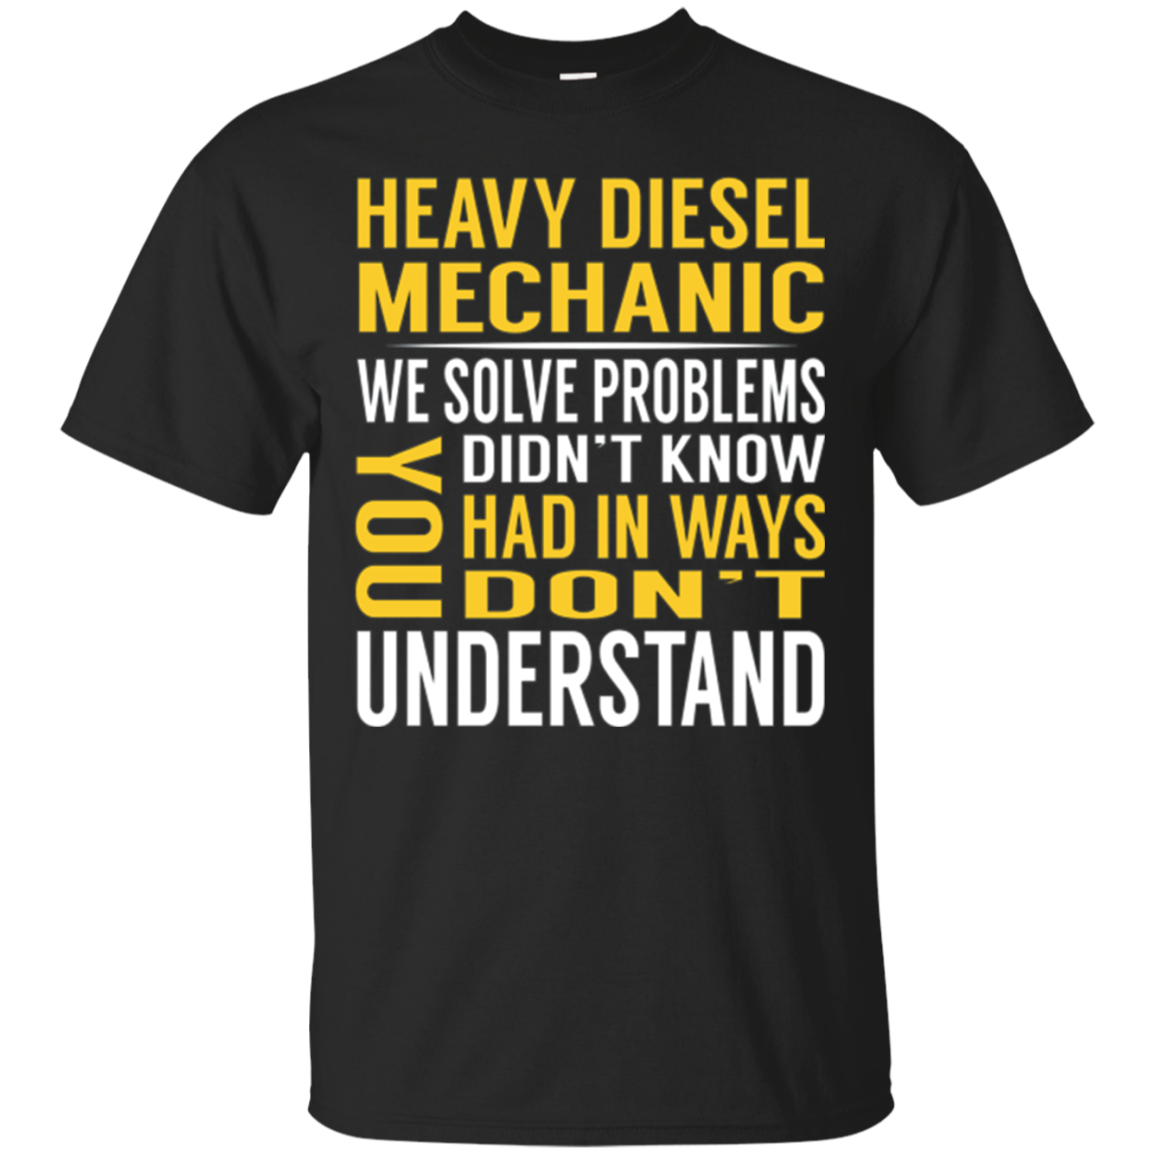 Heavy Diesel Mechanic Solve Problems Tshirts